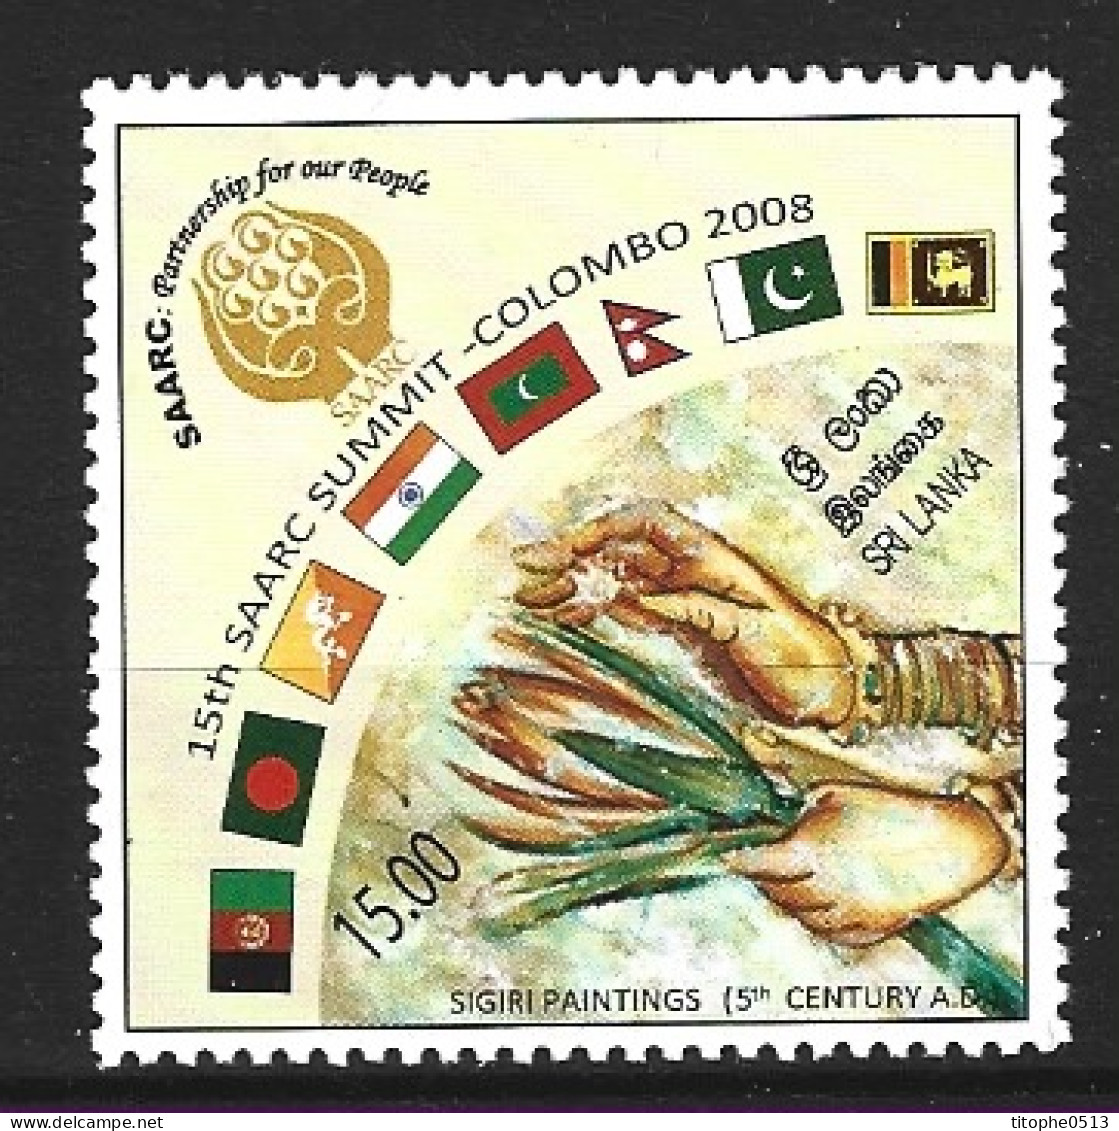 SRI LANKA. N°1658 De 2008. SAARC. - Sri Lanka (Ceylon) (1948-...)